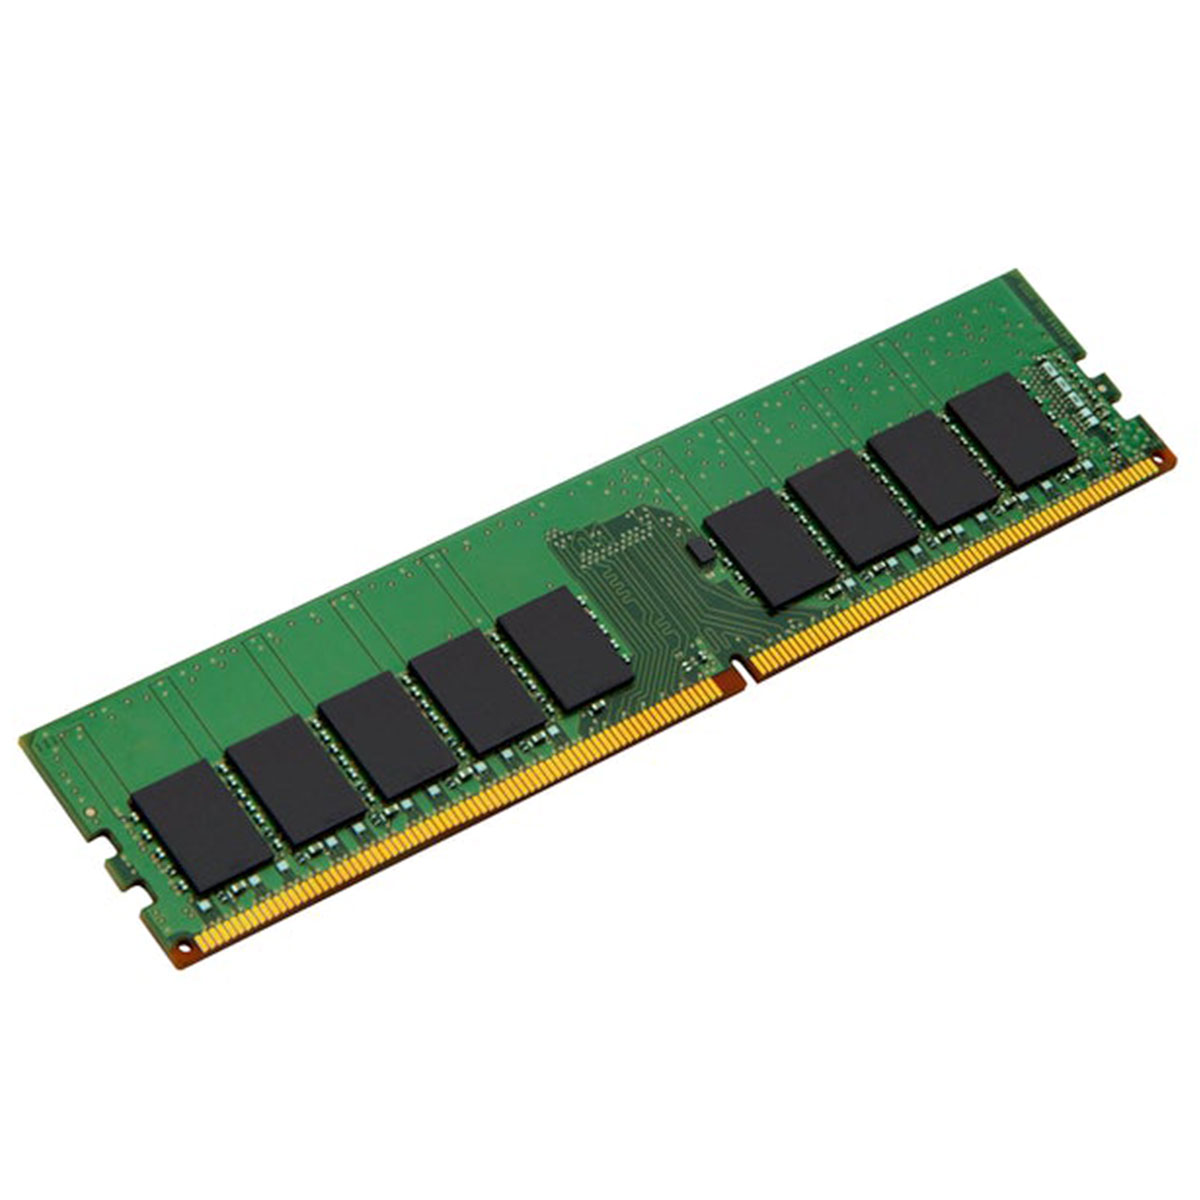 Memória Servidor 8GB DDR4 Kingston KSM32RS8/8HDR - PC4-3200 - ECC - CL22 - Registered com Paridade - 288-Pin RDIMM - Hynix D